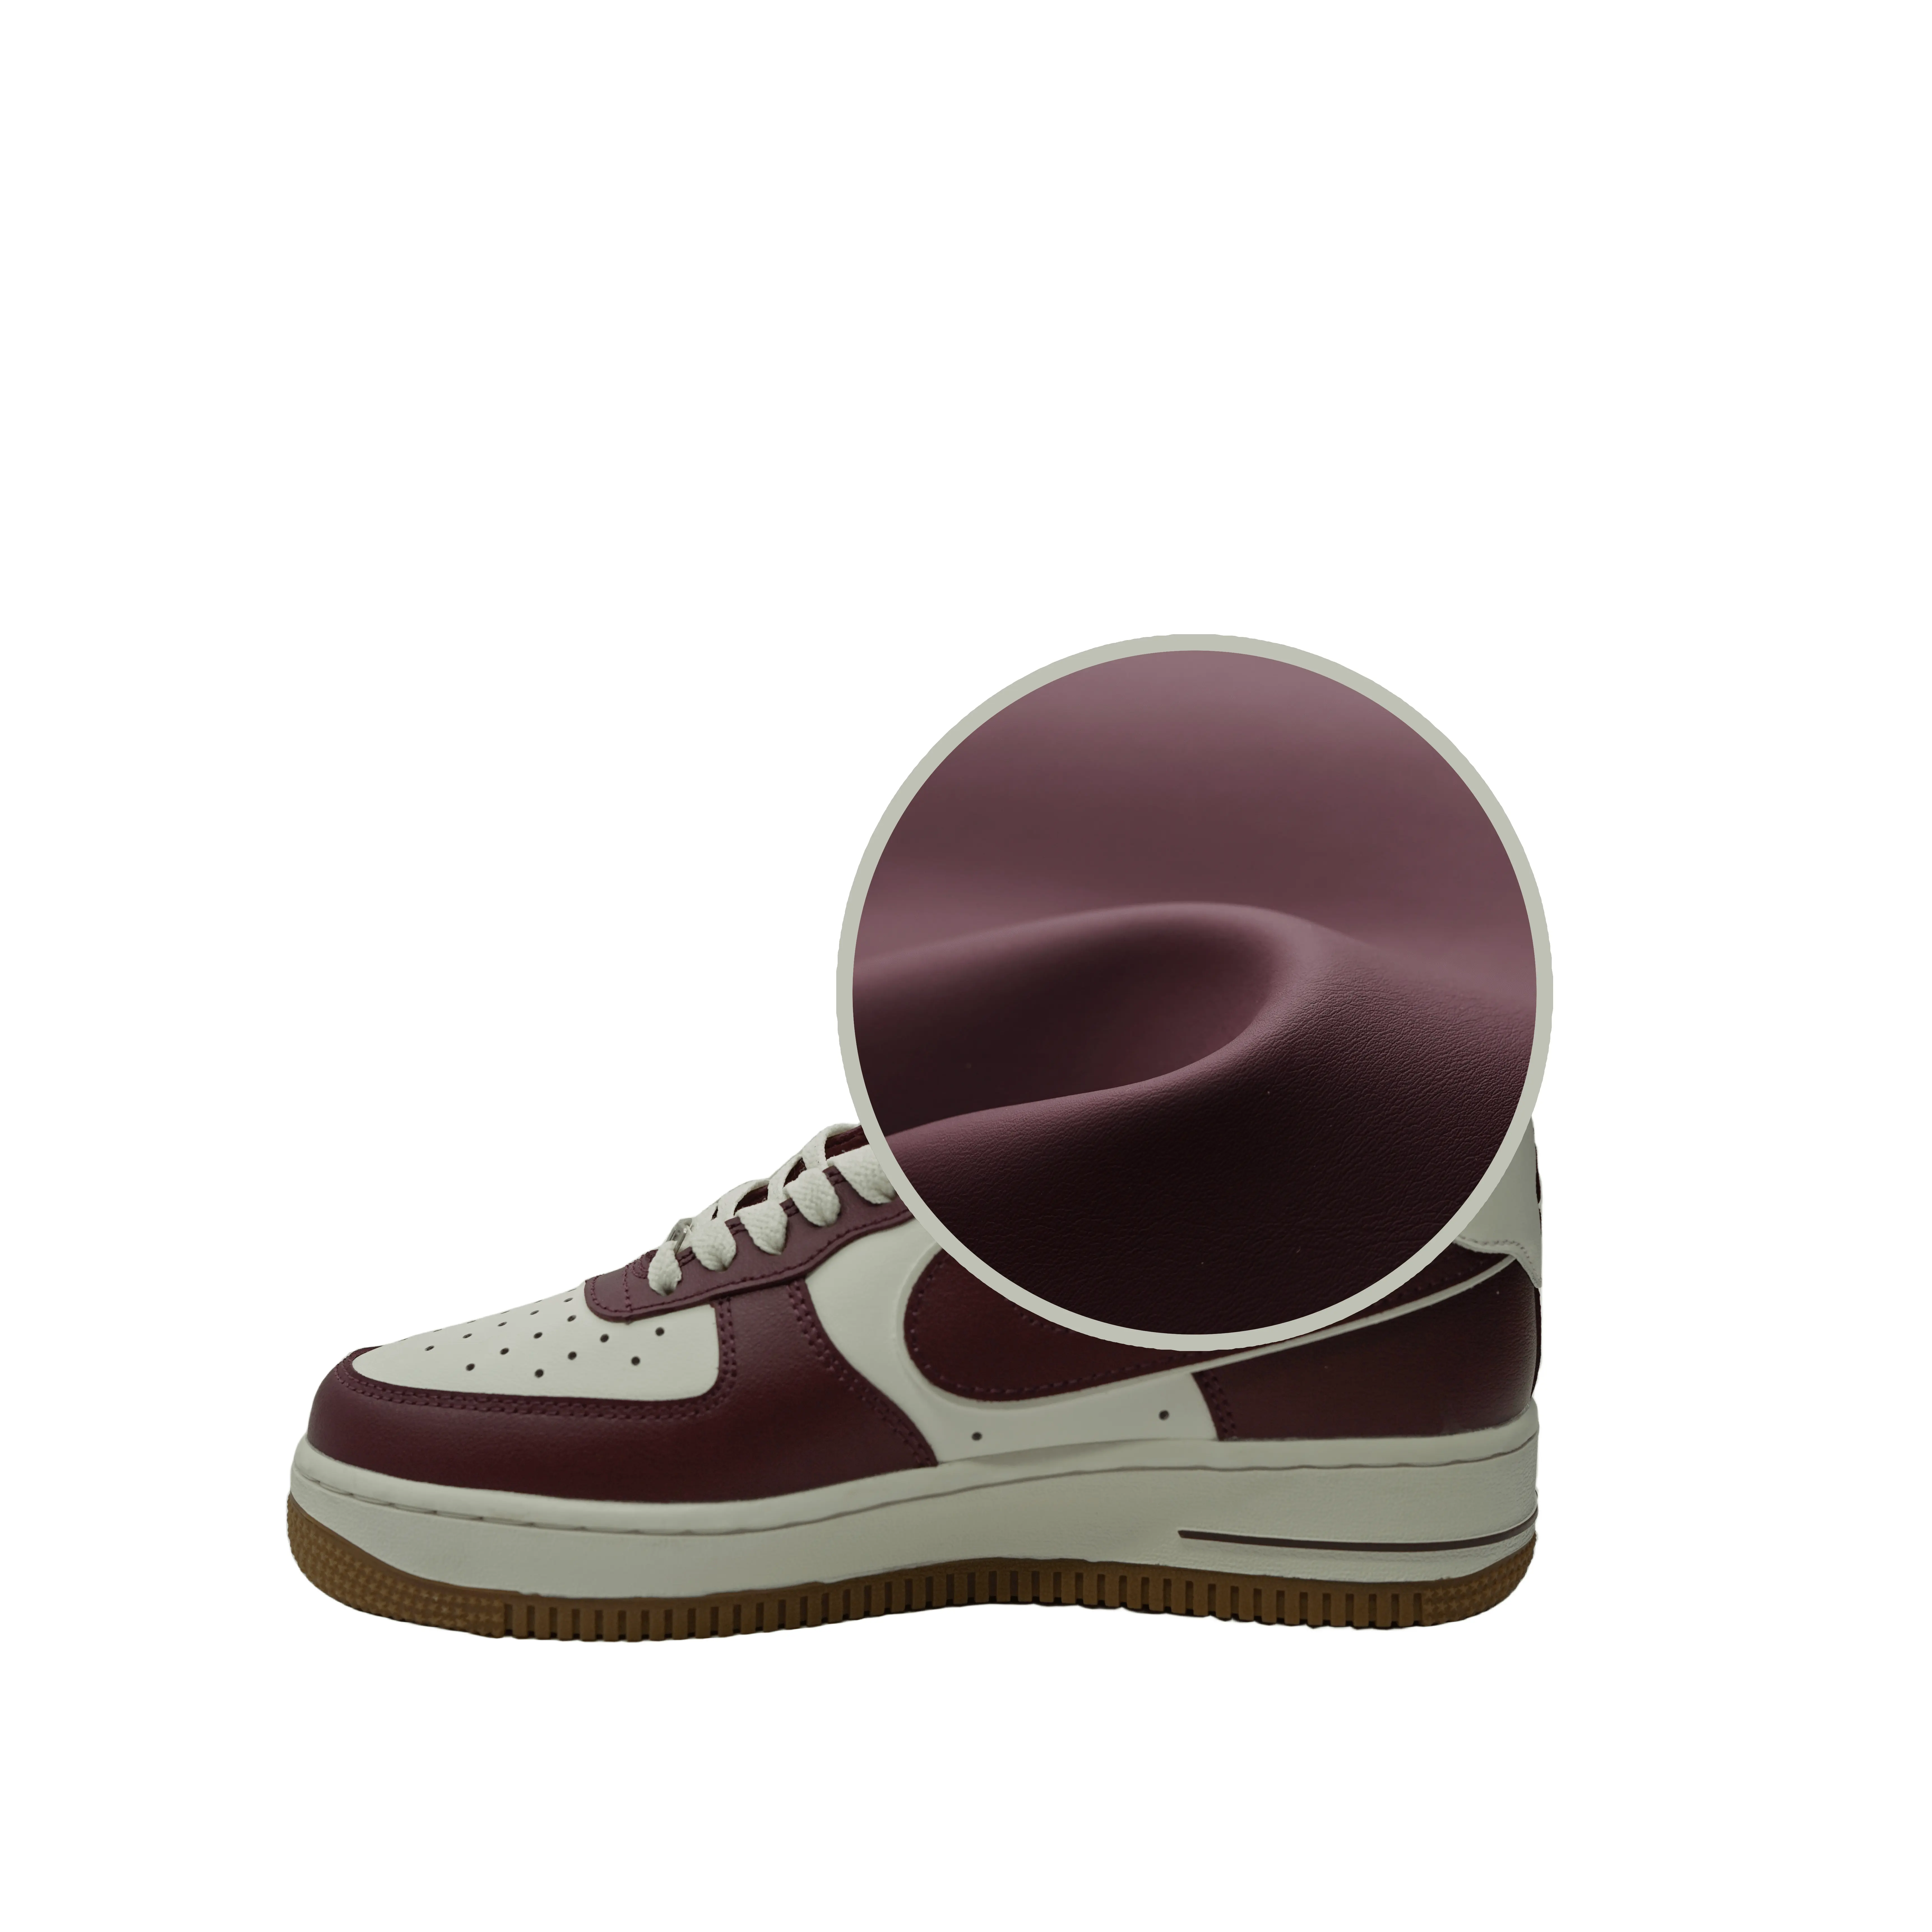 20105 RTS עמיד בפני שחיקה חומרי ייצור נעליים בולטות נגד טחב מלאכותי סינטטי פו PU גליל עור טבעוני